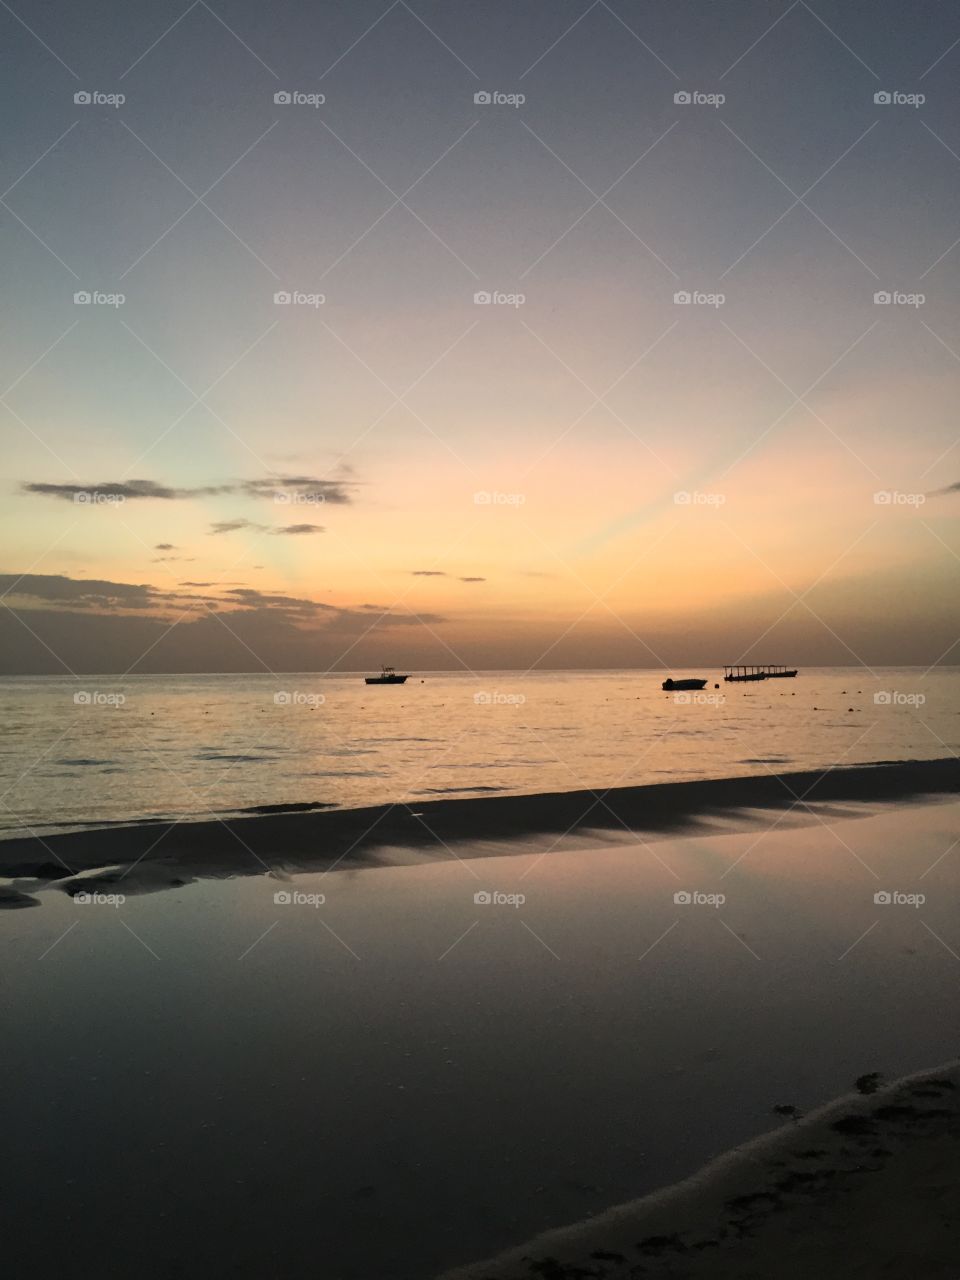 Jamaican Sunsets